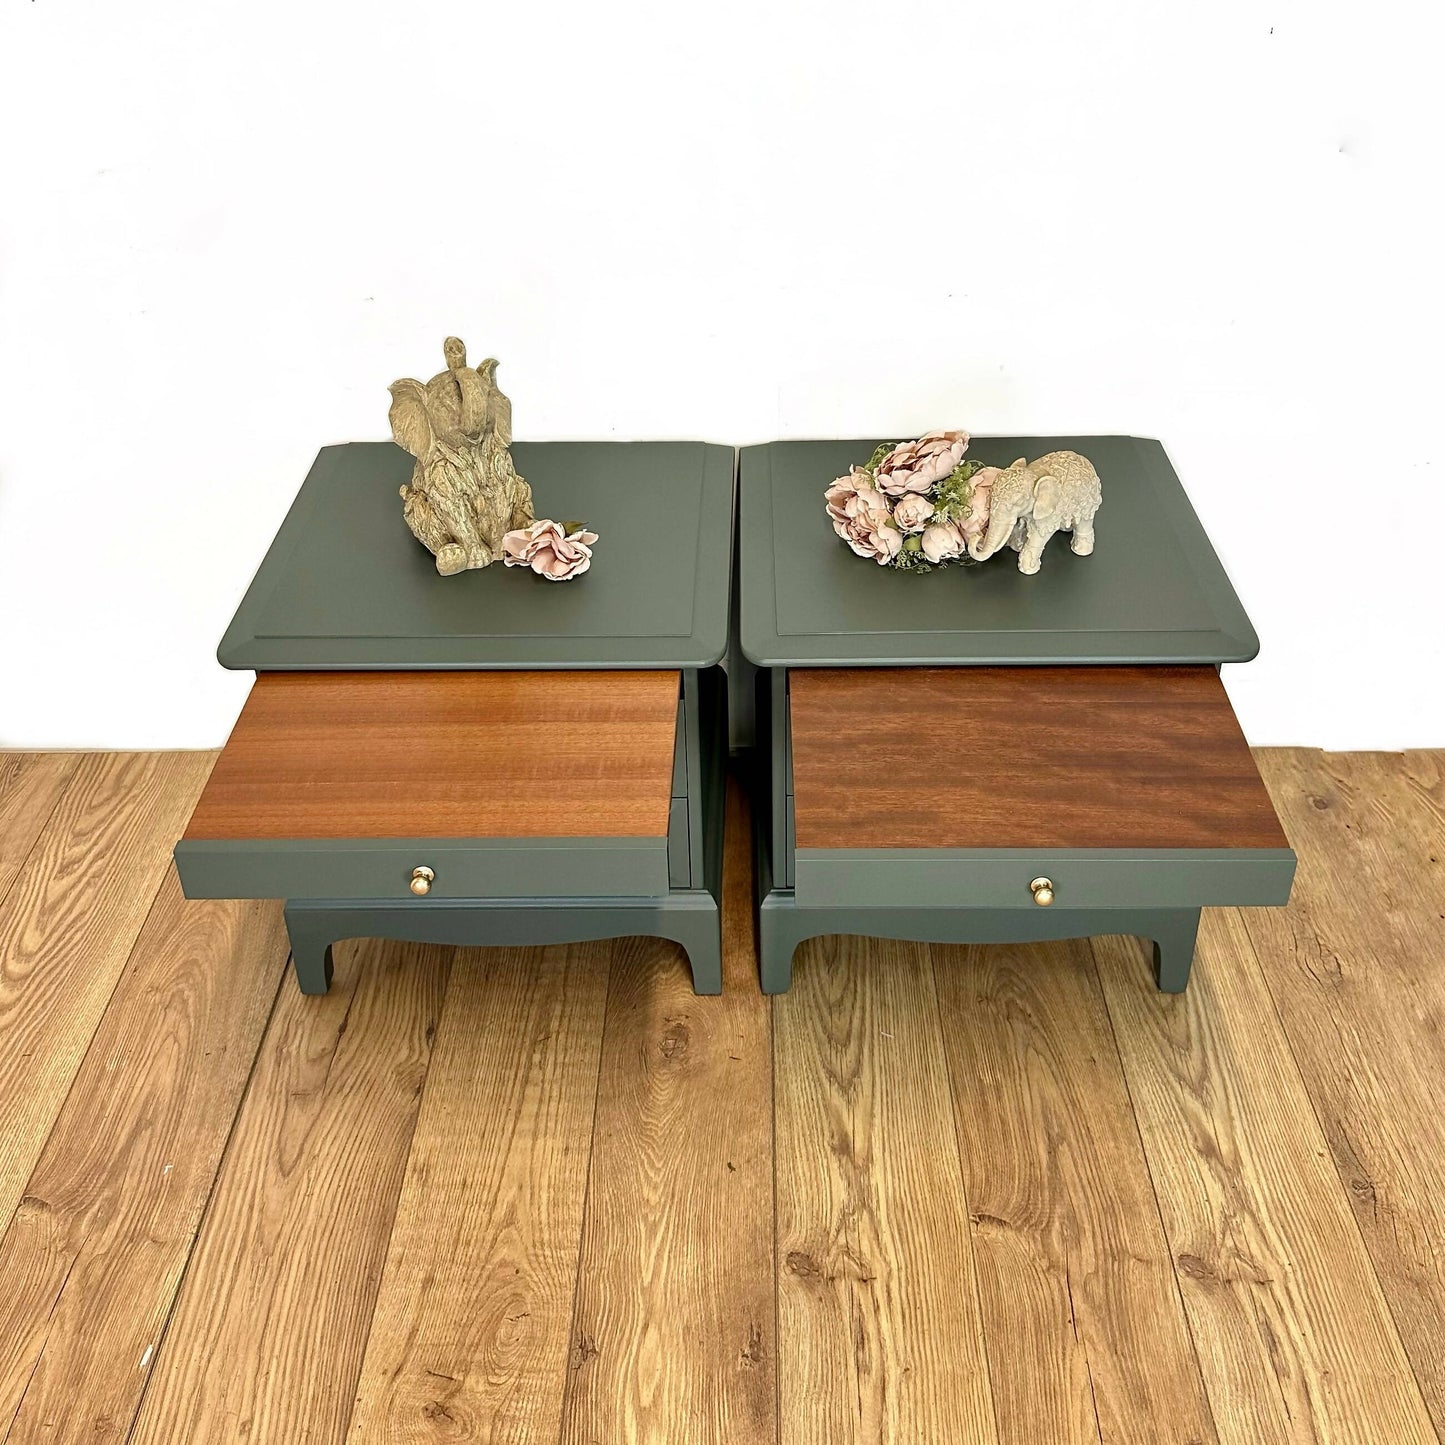 Refurbished Stag Minstrel bedside tables in olive green, vintage nightstands, upcycled, handprinted, drawers, dresser, chest, bedroom, pair